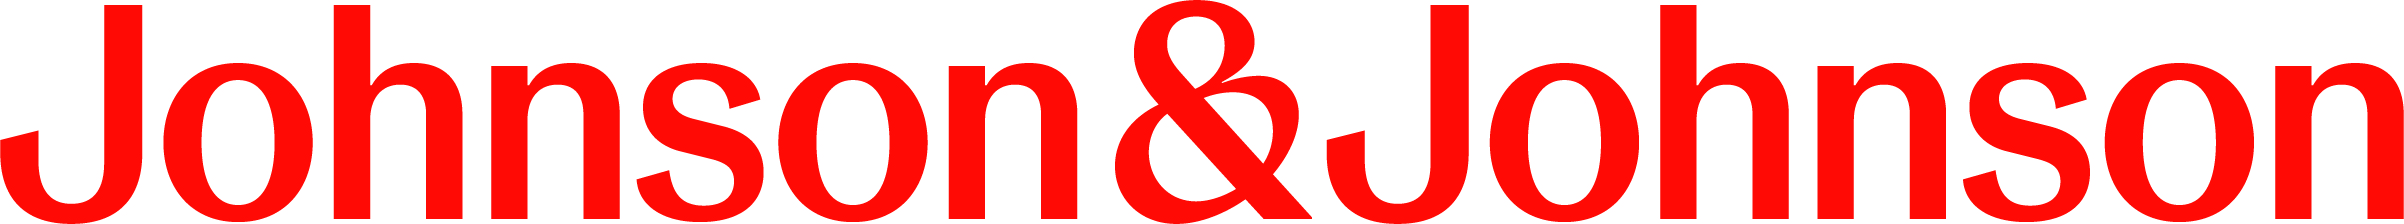 JNJ_Logo_SingleLine_Red_CMYK